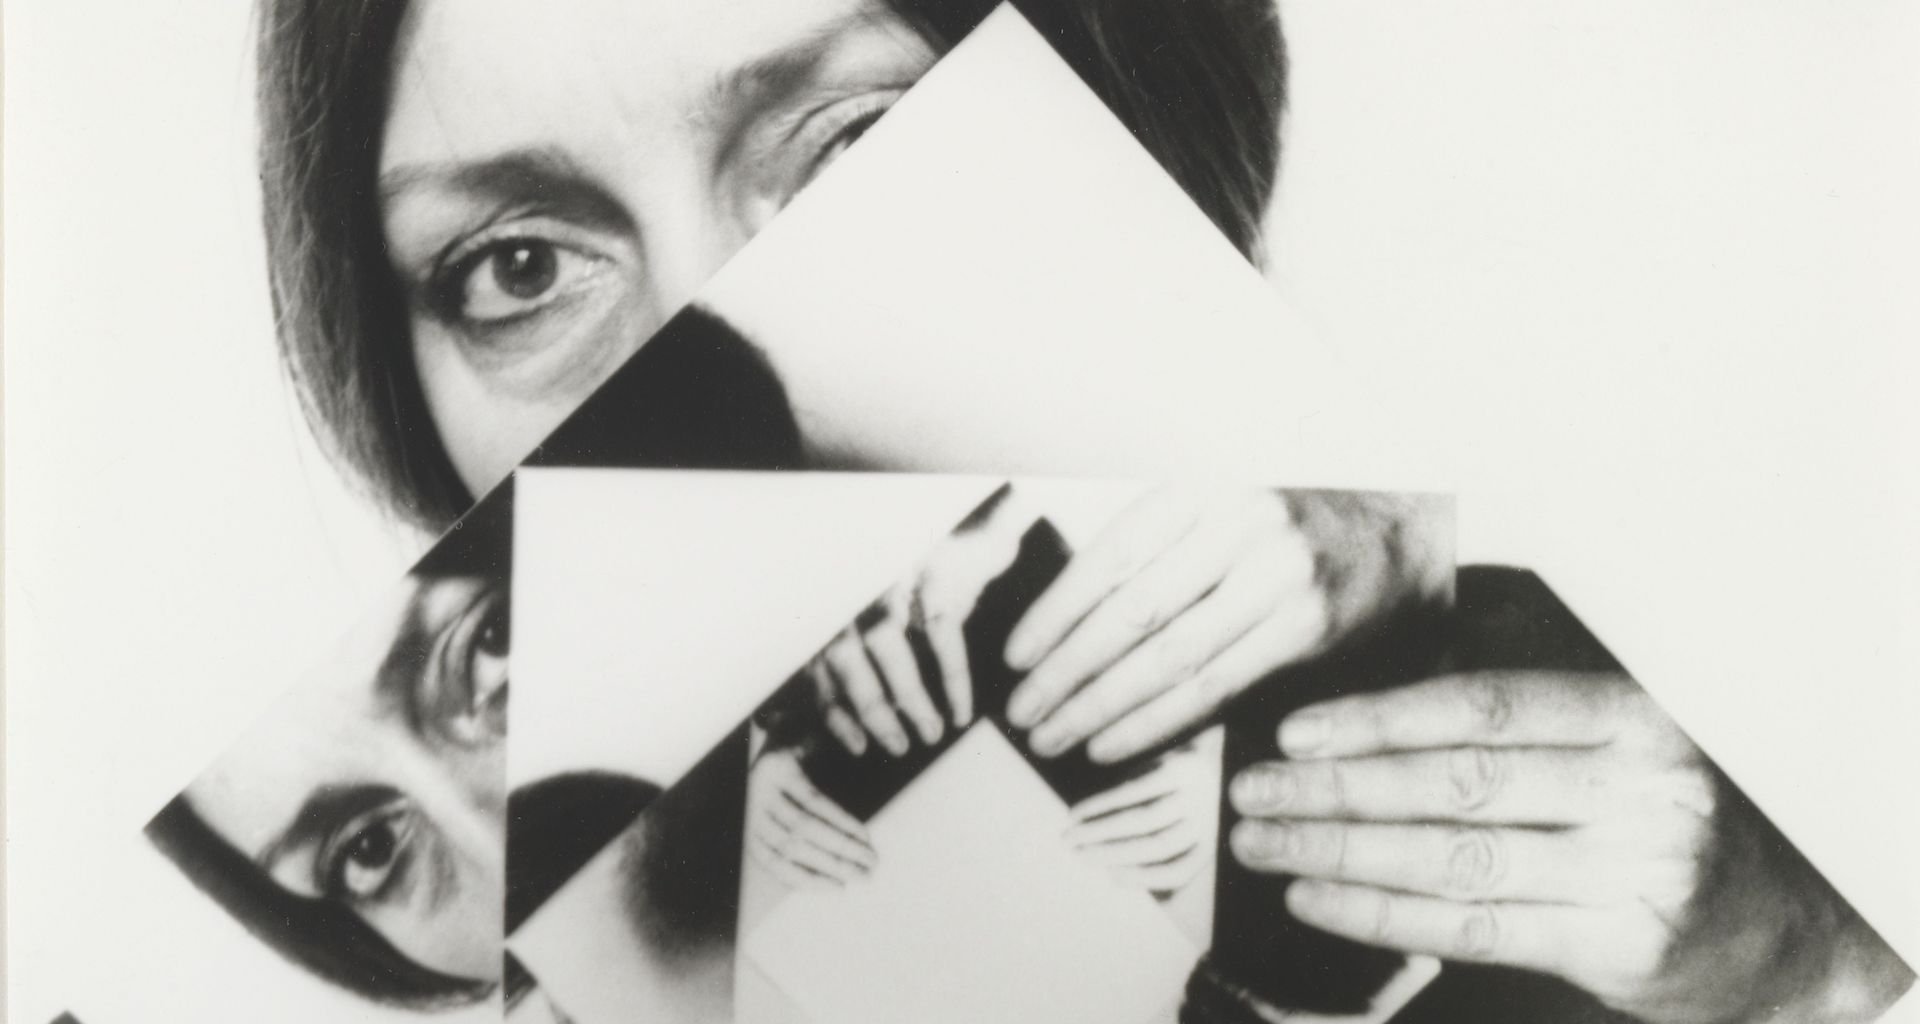 The glorious optimist: Hungarian neo-avantgarde artist Dóra Maurer arrives at London’s Tate Modern